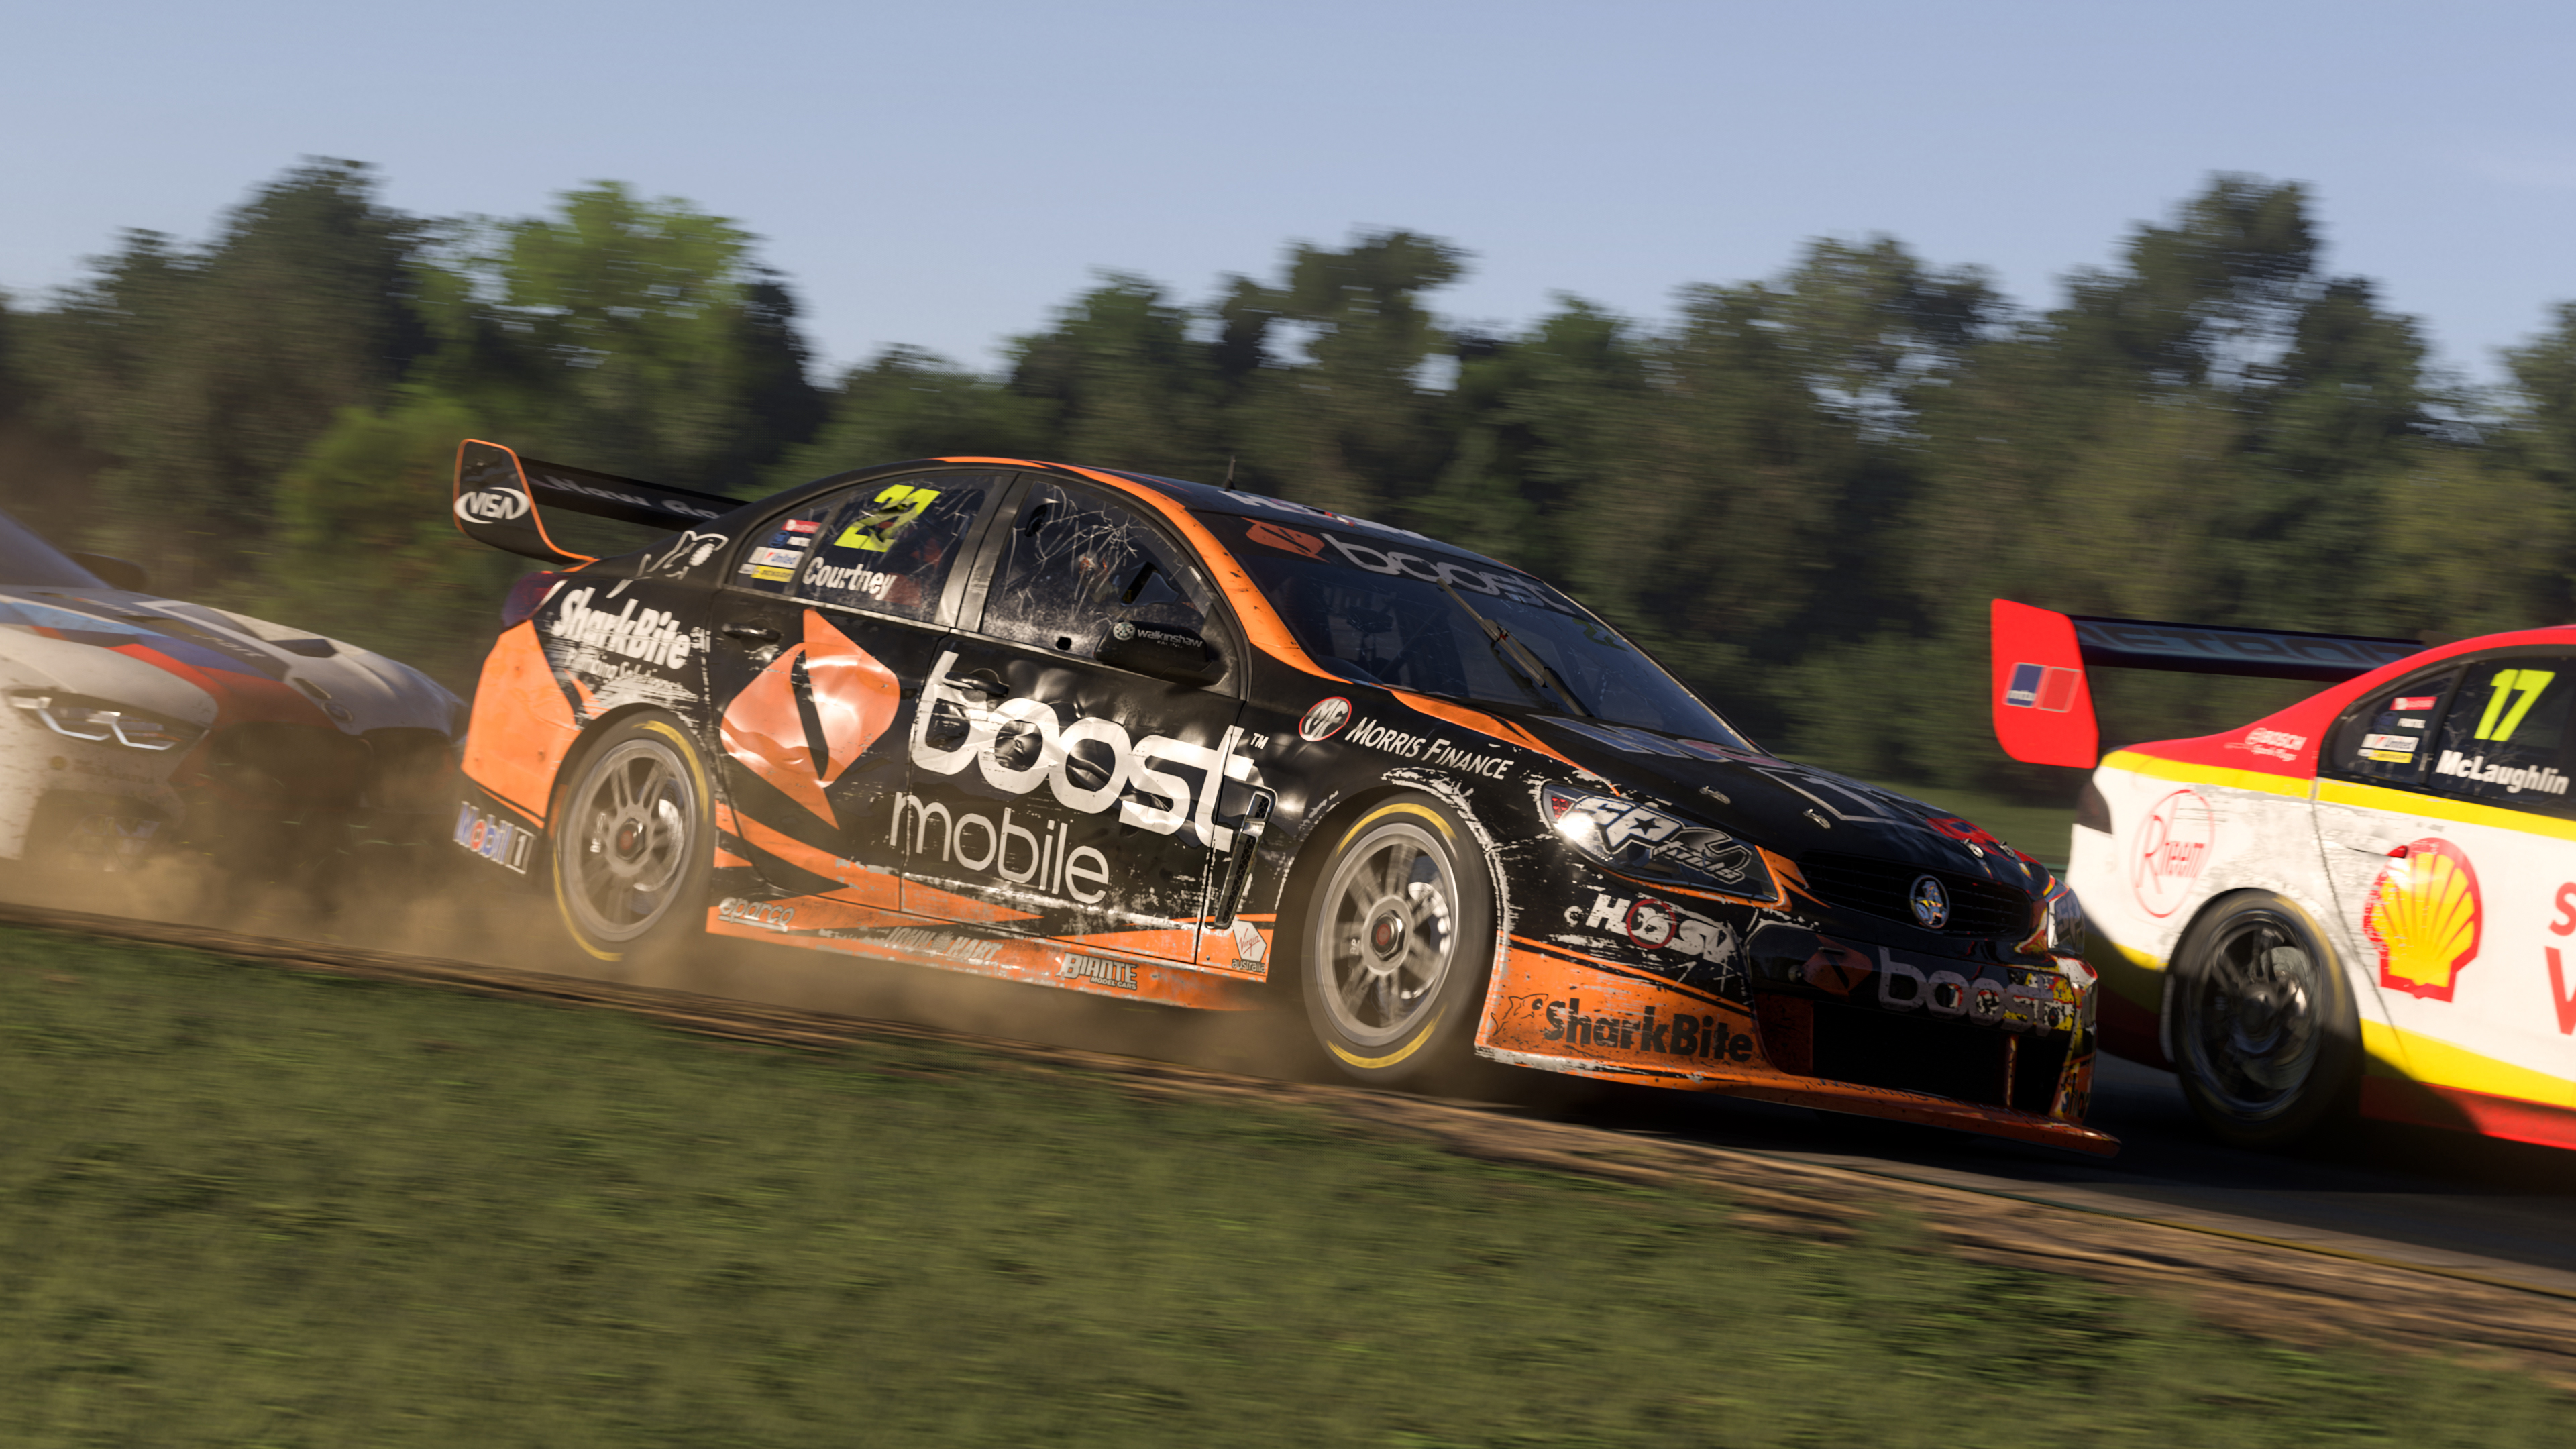 Forza Motorsport (@ForzaMotorsport) / X